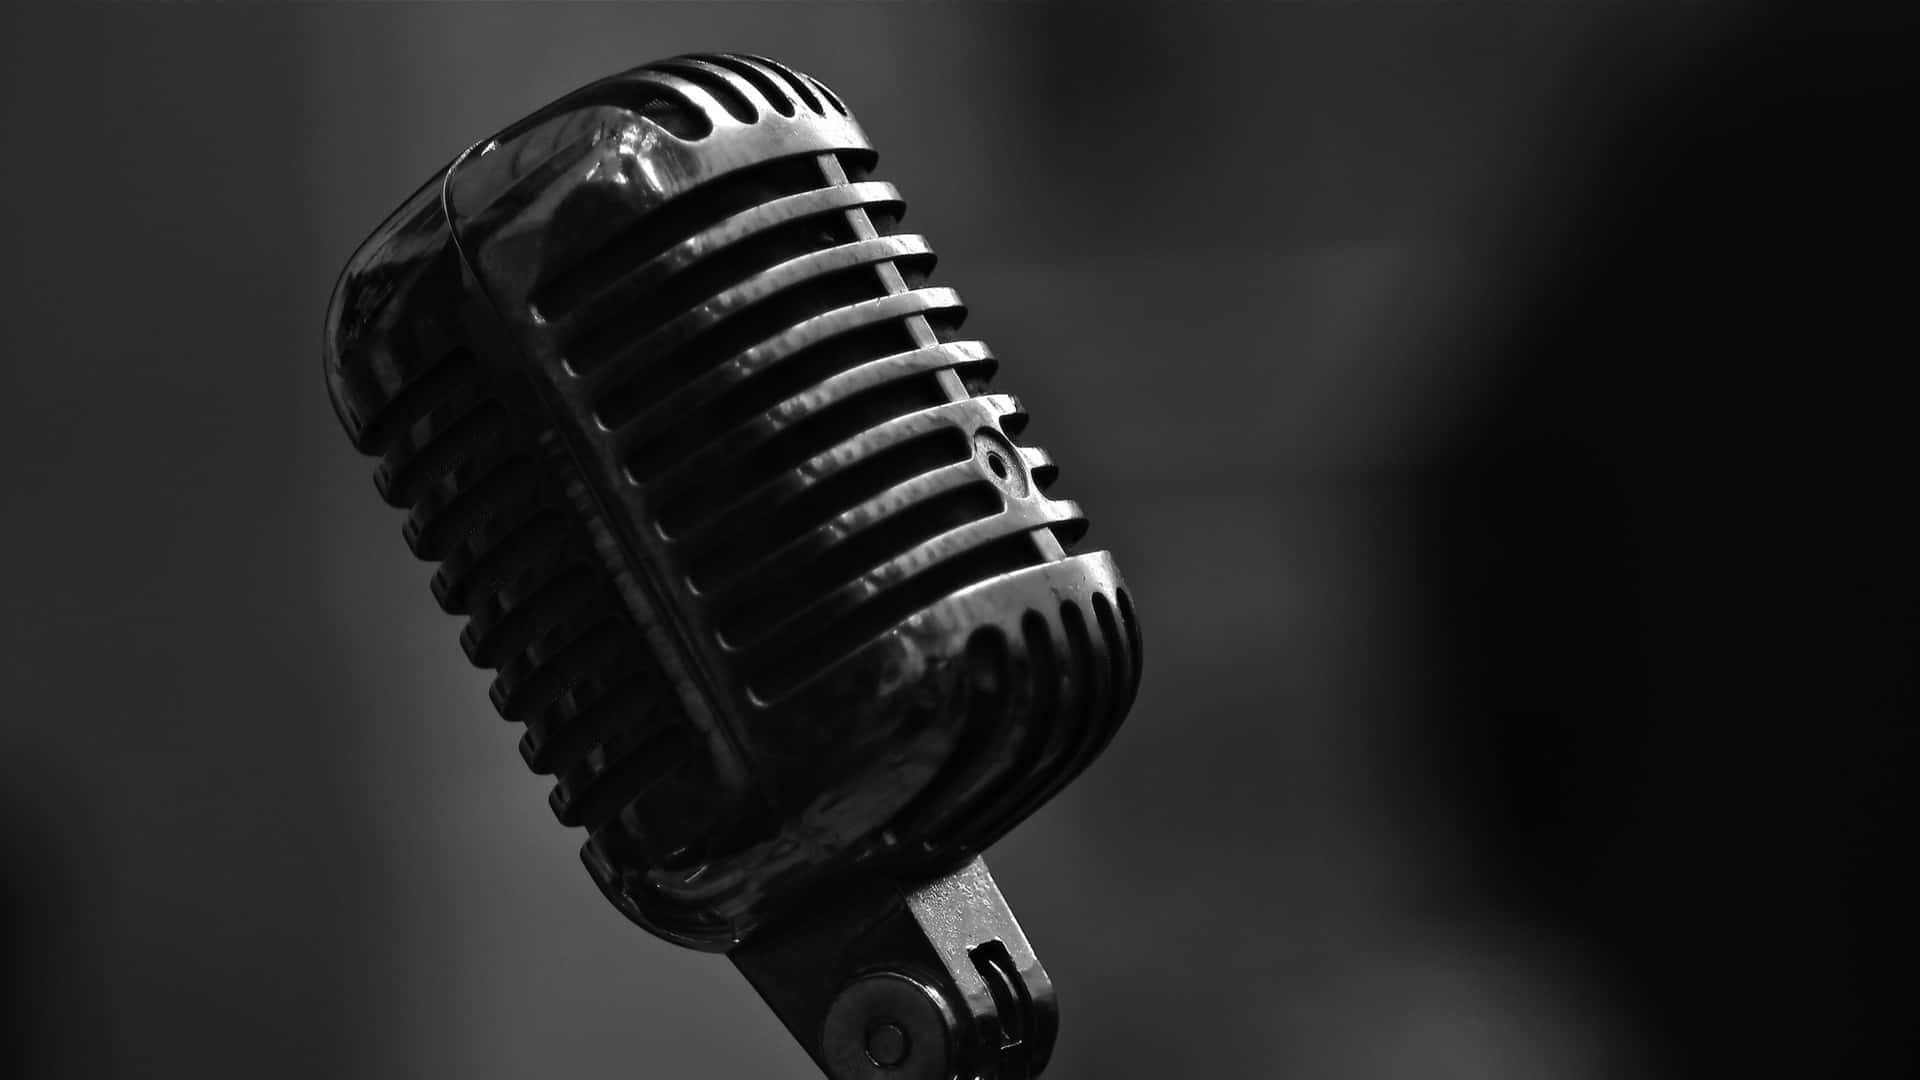 Retro Microphone In Black And White Wallpaper